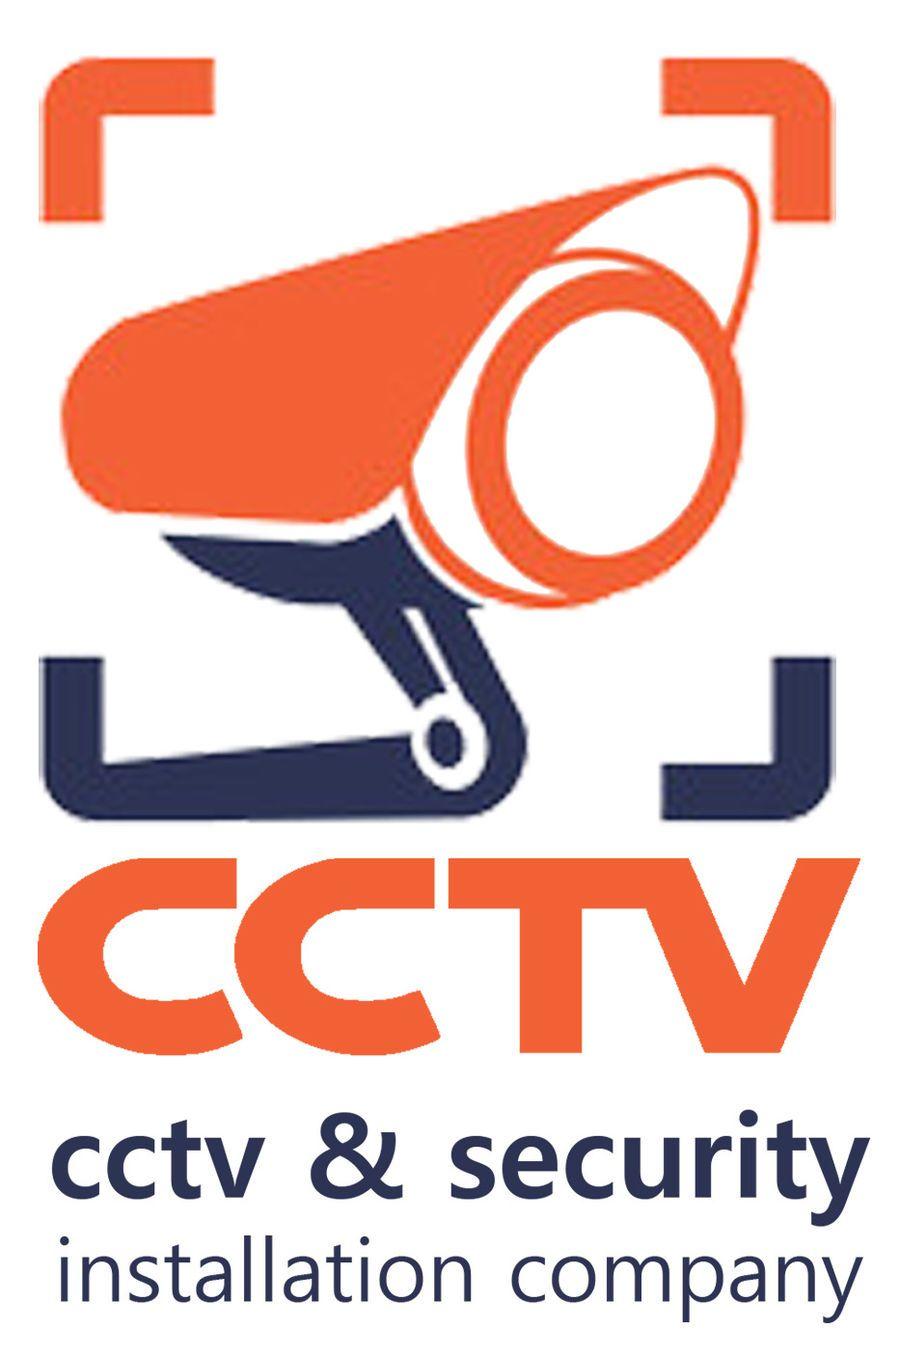 CCTV Logo - Entry by somusomnath for Design a logo and branding for a cctv